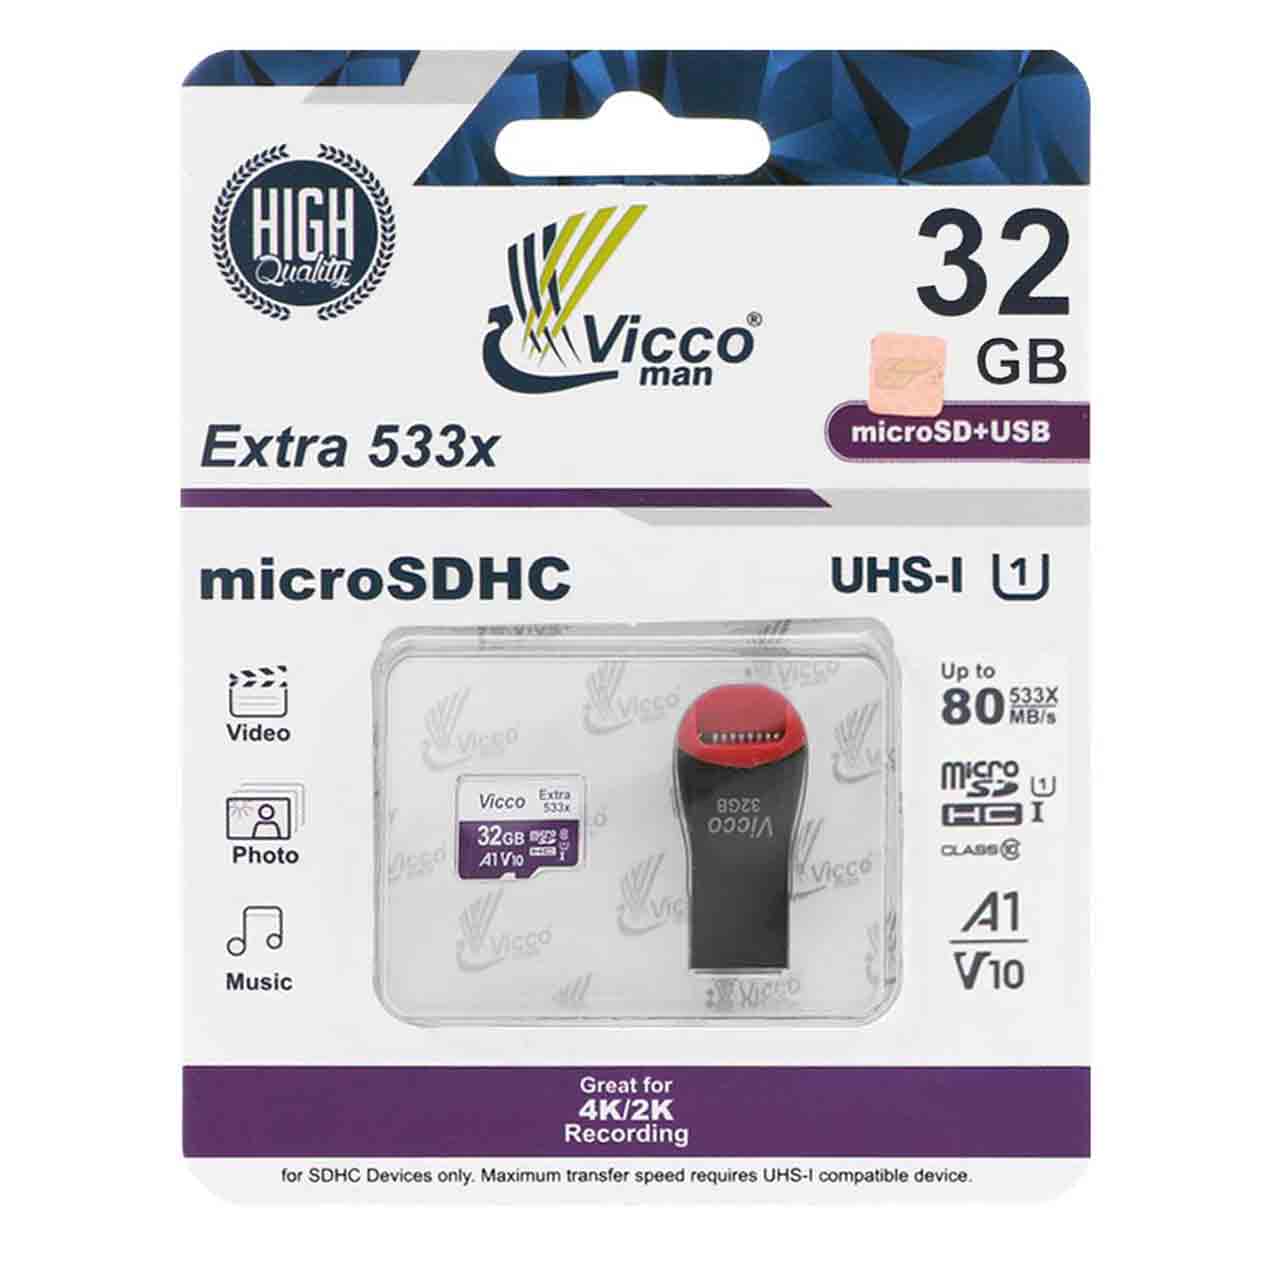 Vicco man MicroSDHC & USB UHS-I U1 Class10 Extra 533X- 32GB